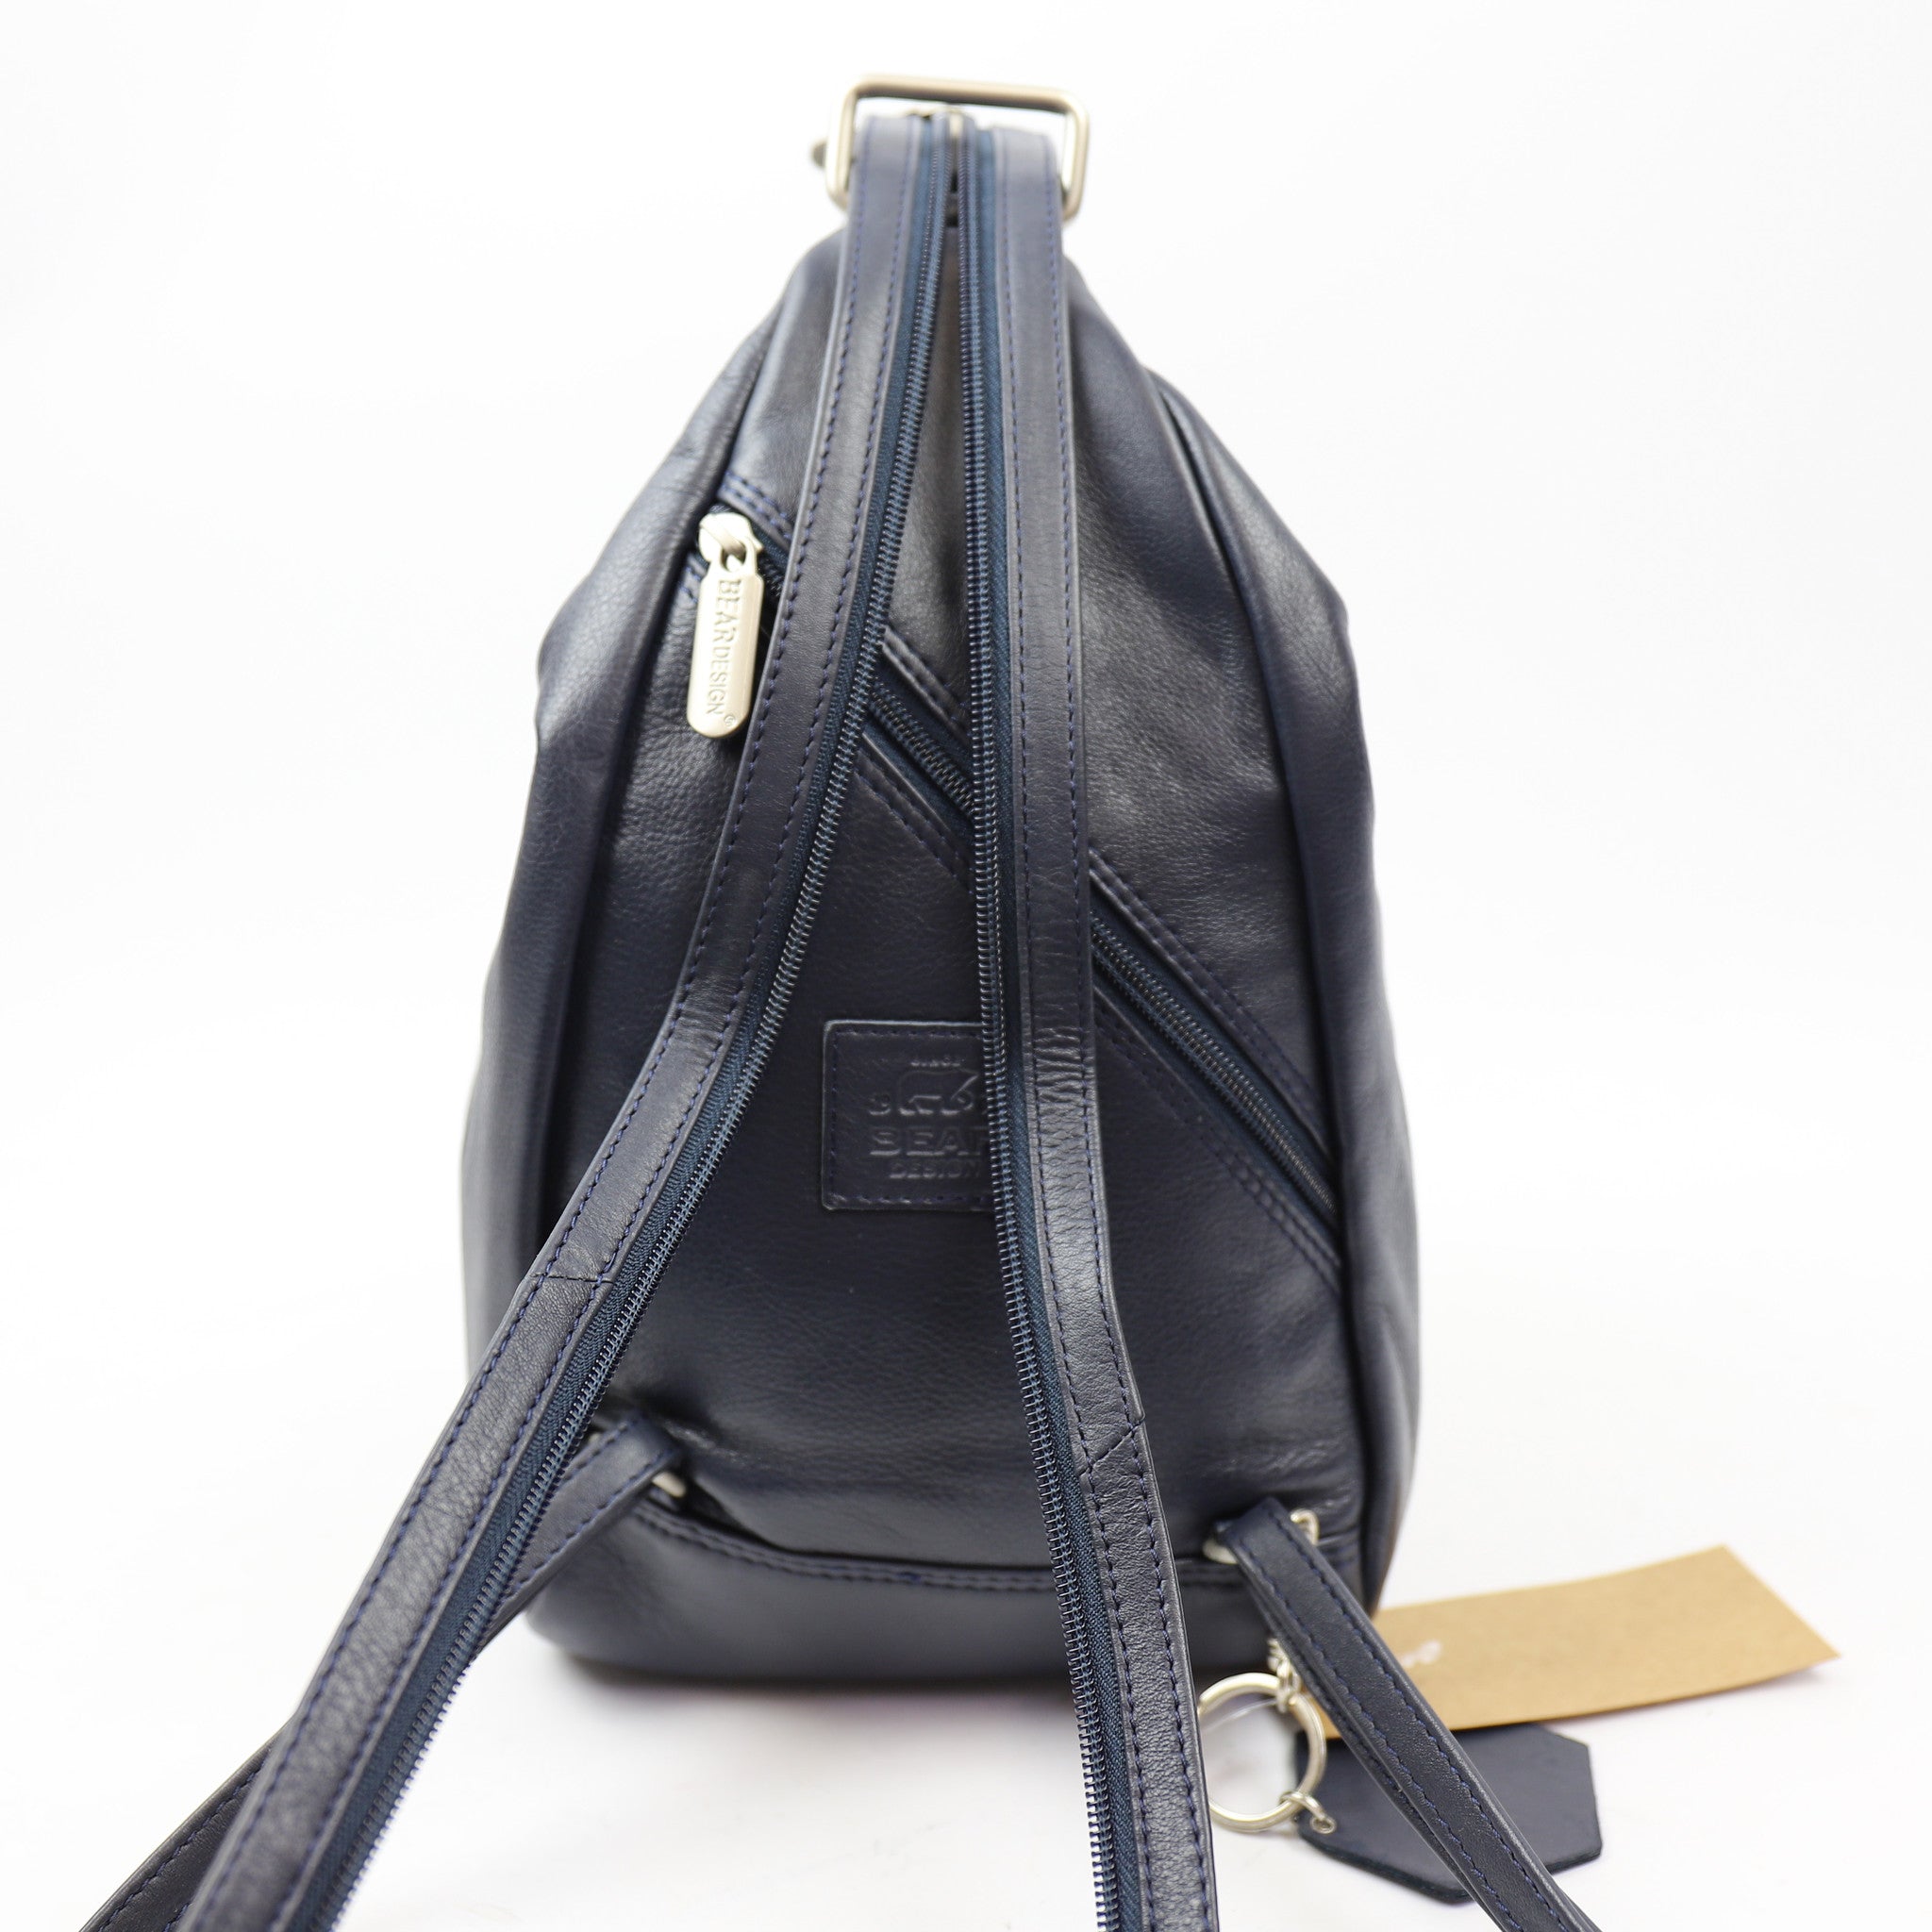 Backpack 'Hannie' dark blue - B 5555